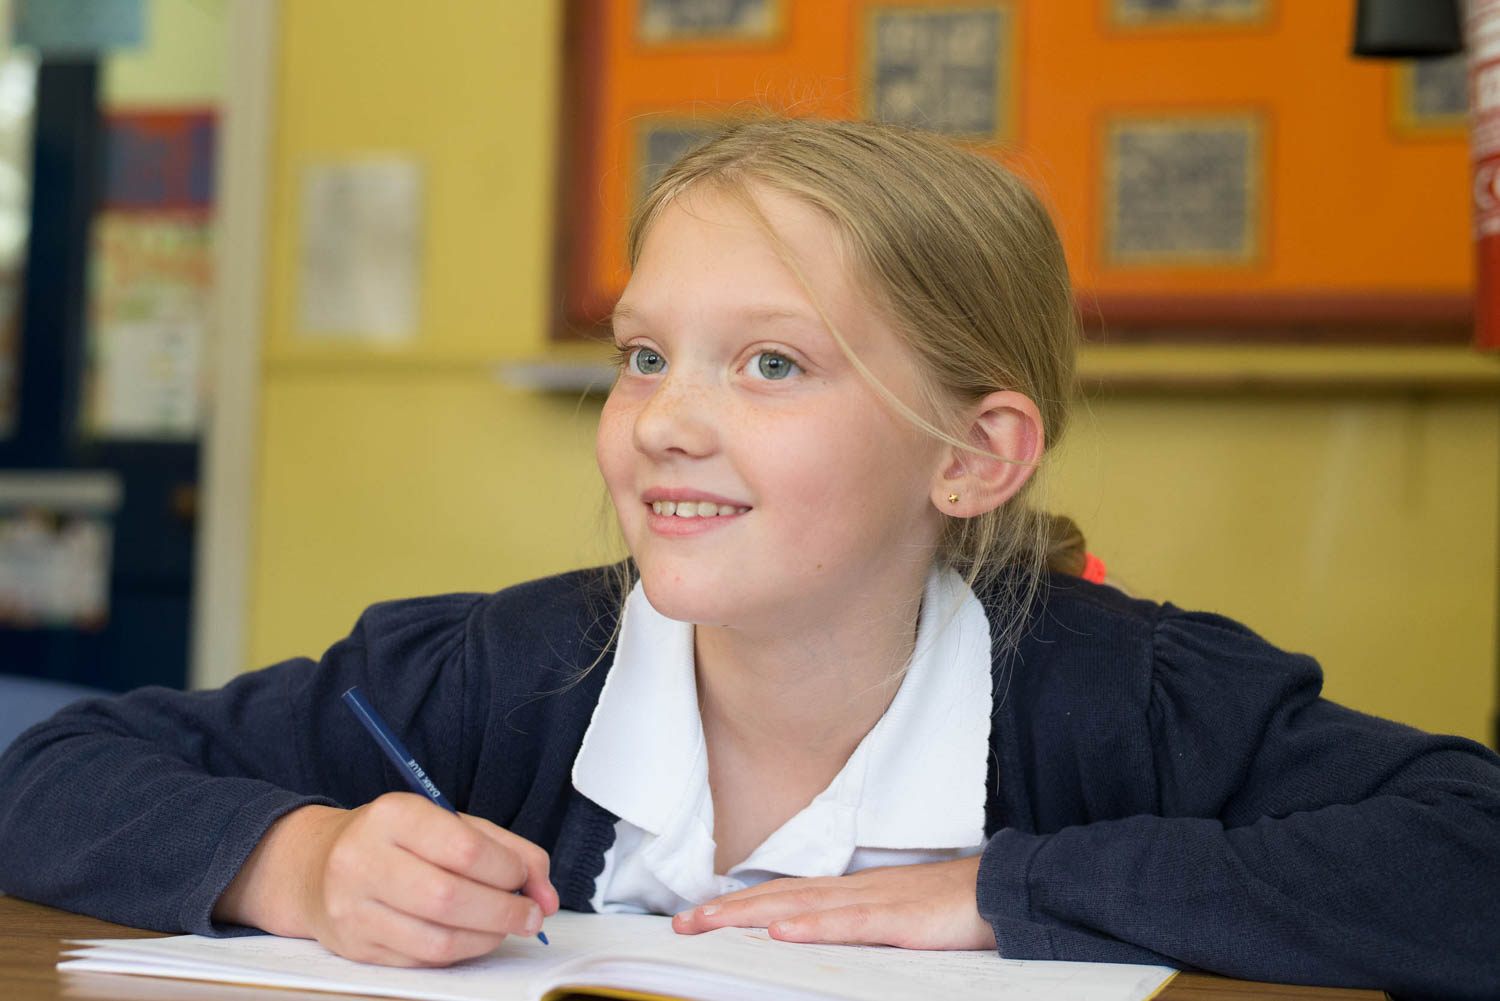 School girl at desk smiling